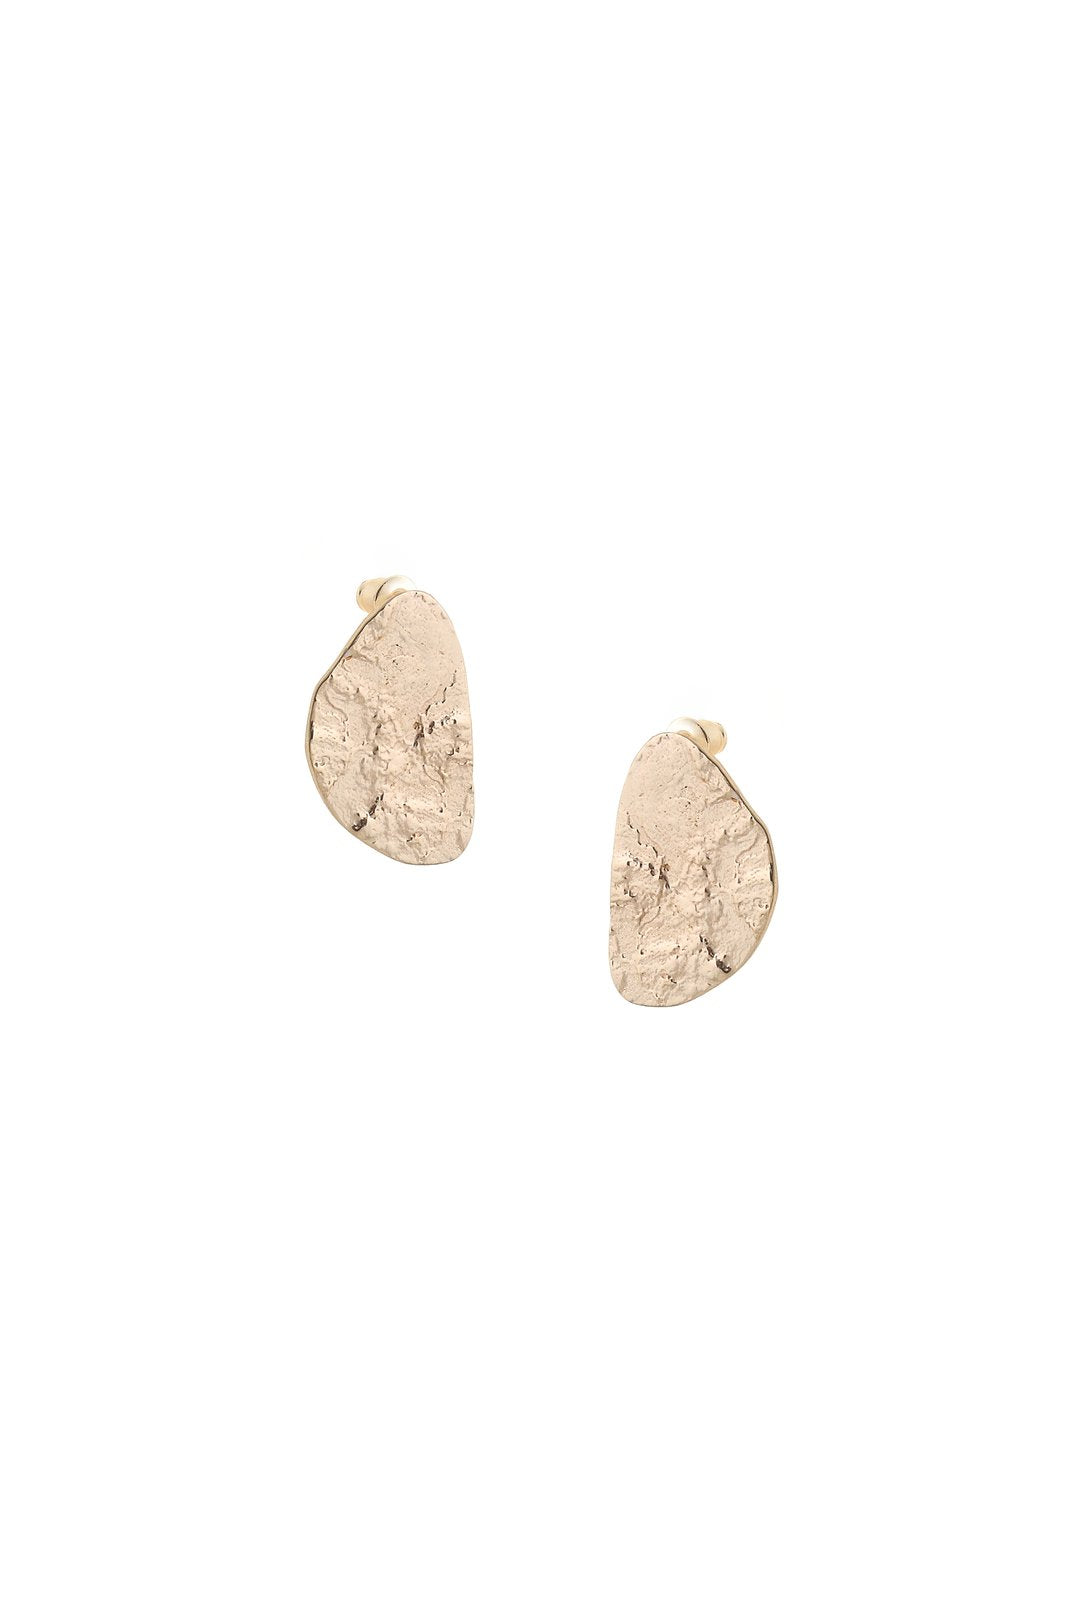 Gold Cloud Earrings - The Nancy Smillie Shop - Art, Jewellery & Designer Gifts Glasgow